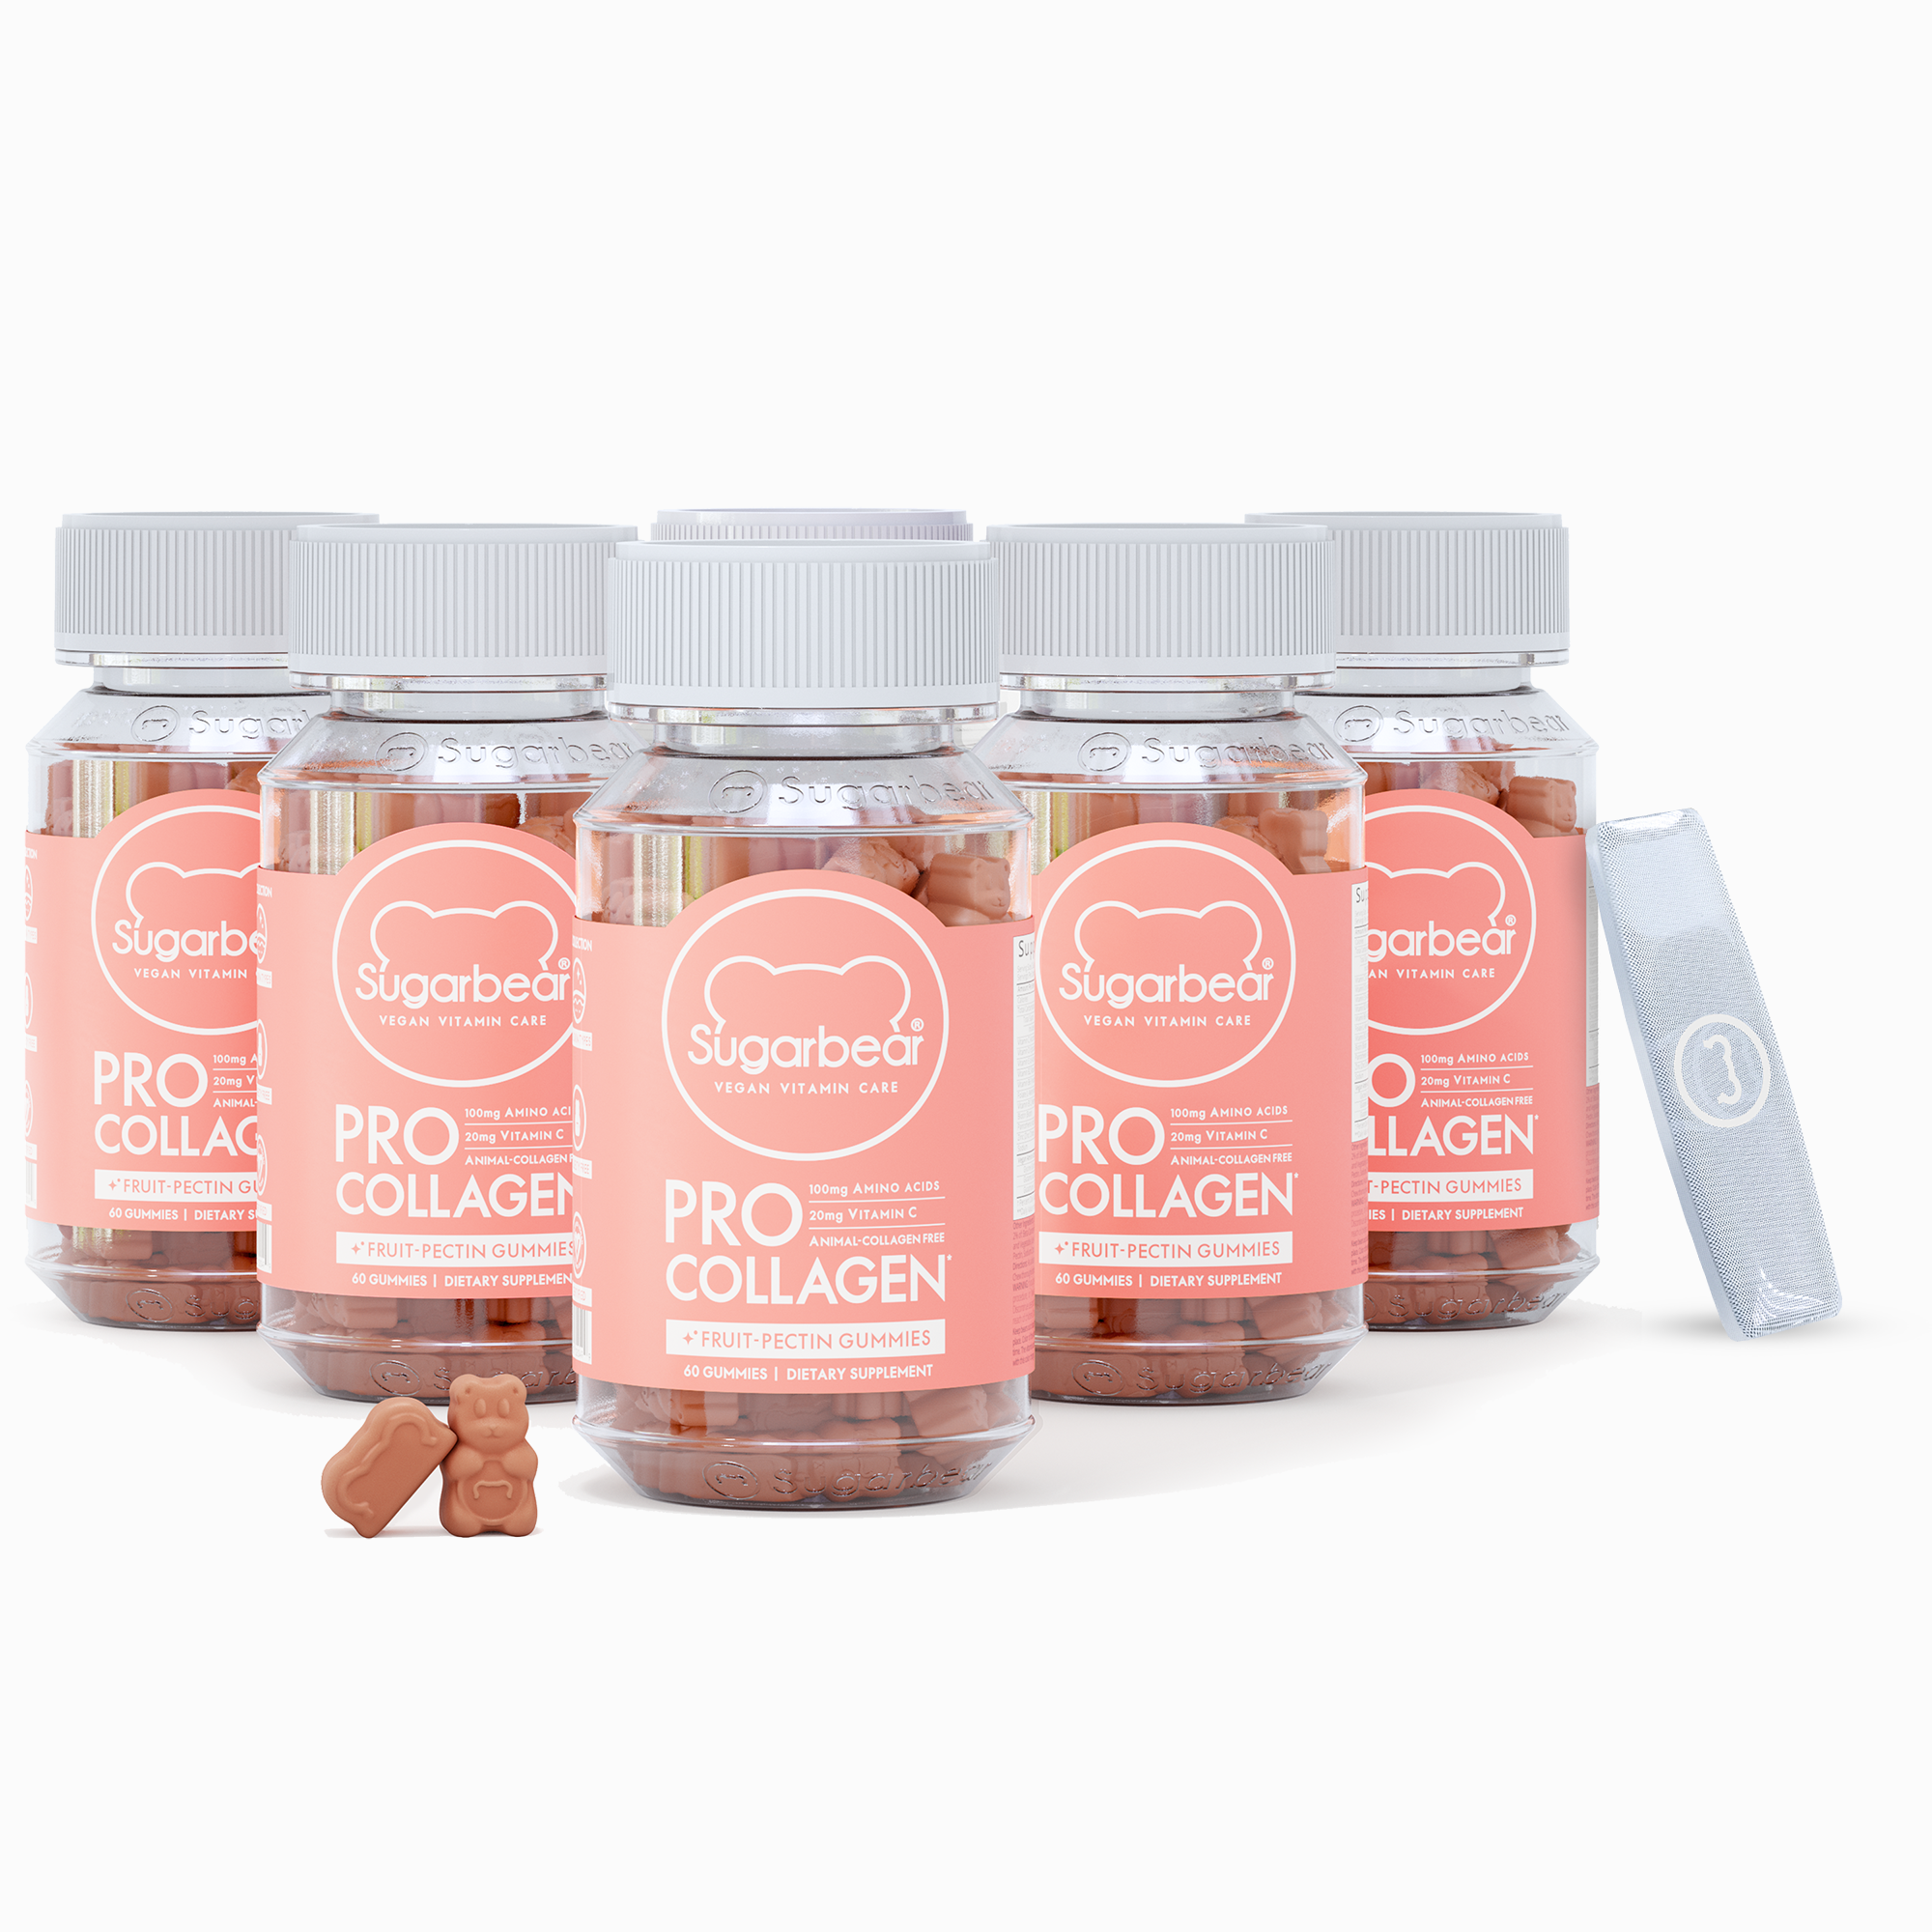 Sugarbear ProCollagen Vitamins - 6 Month Pack + Free Gift